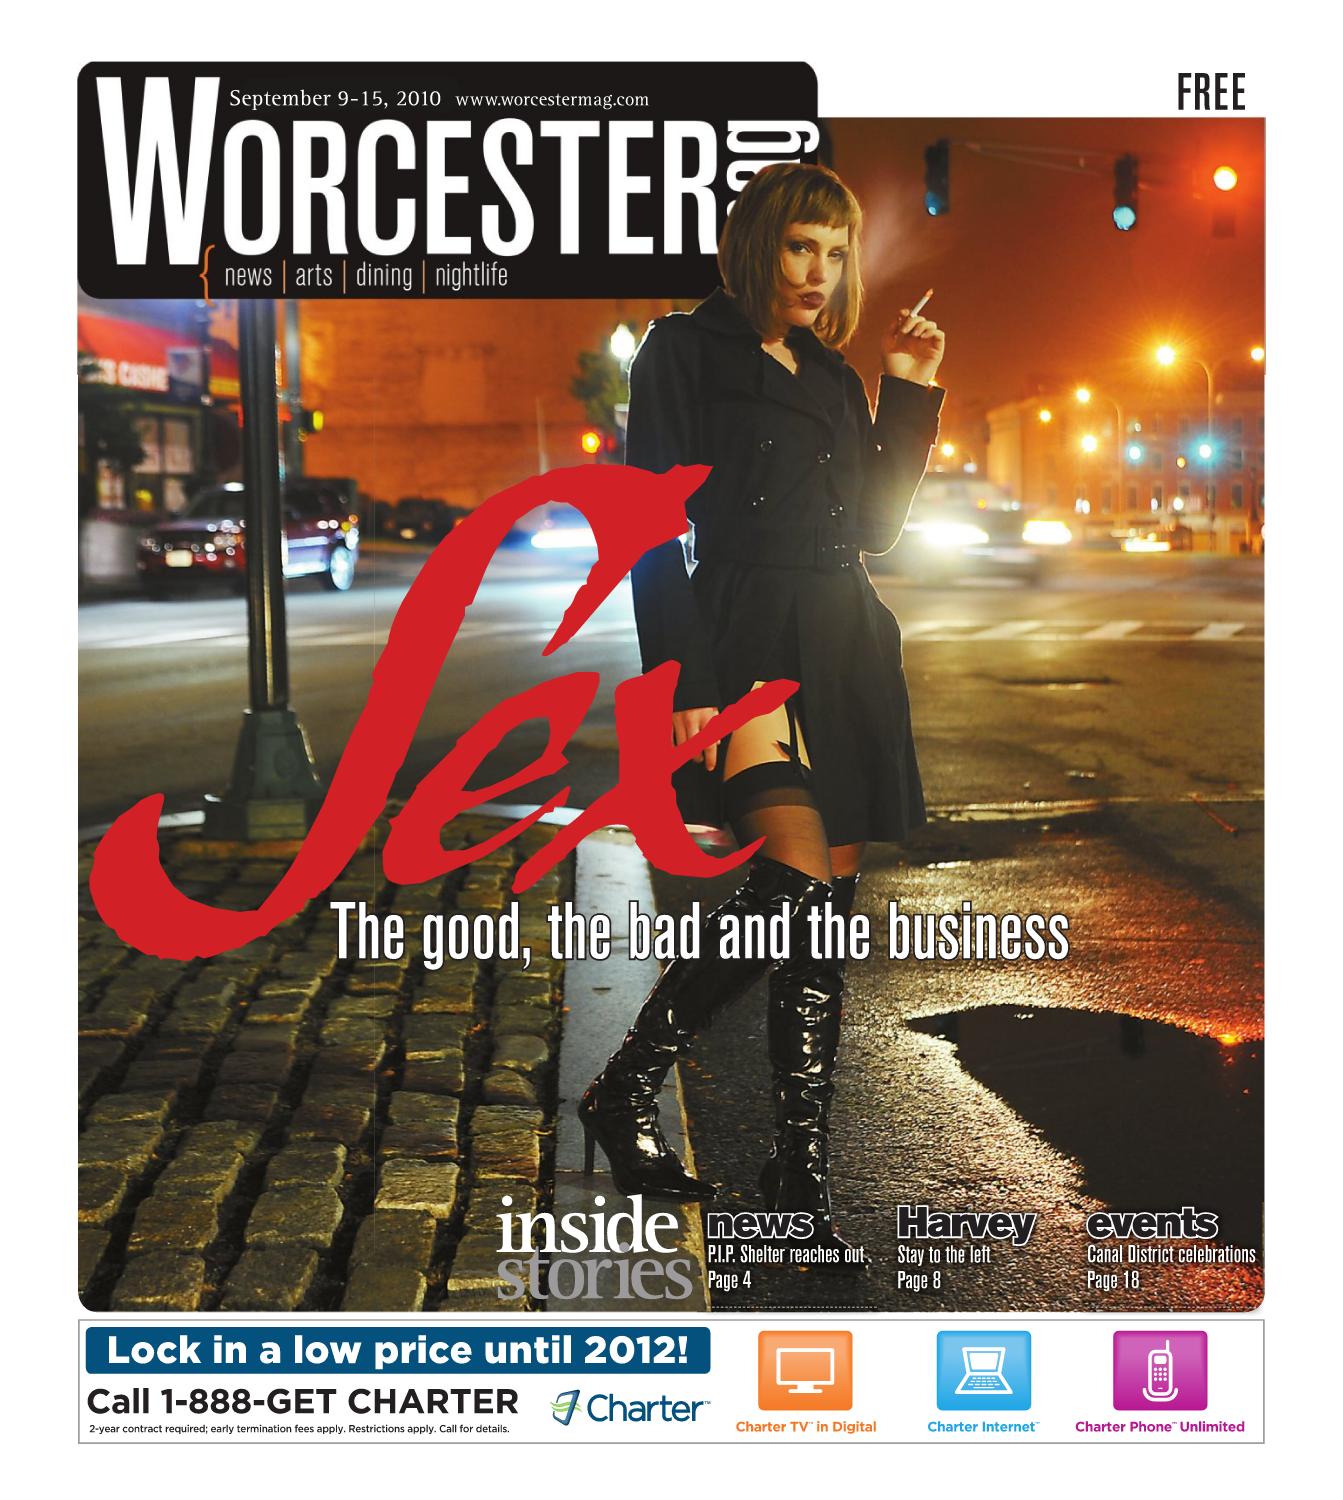 Worcester crack whore